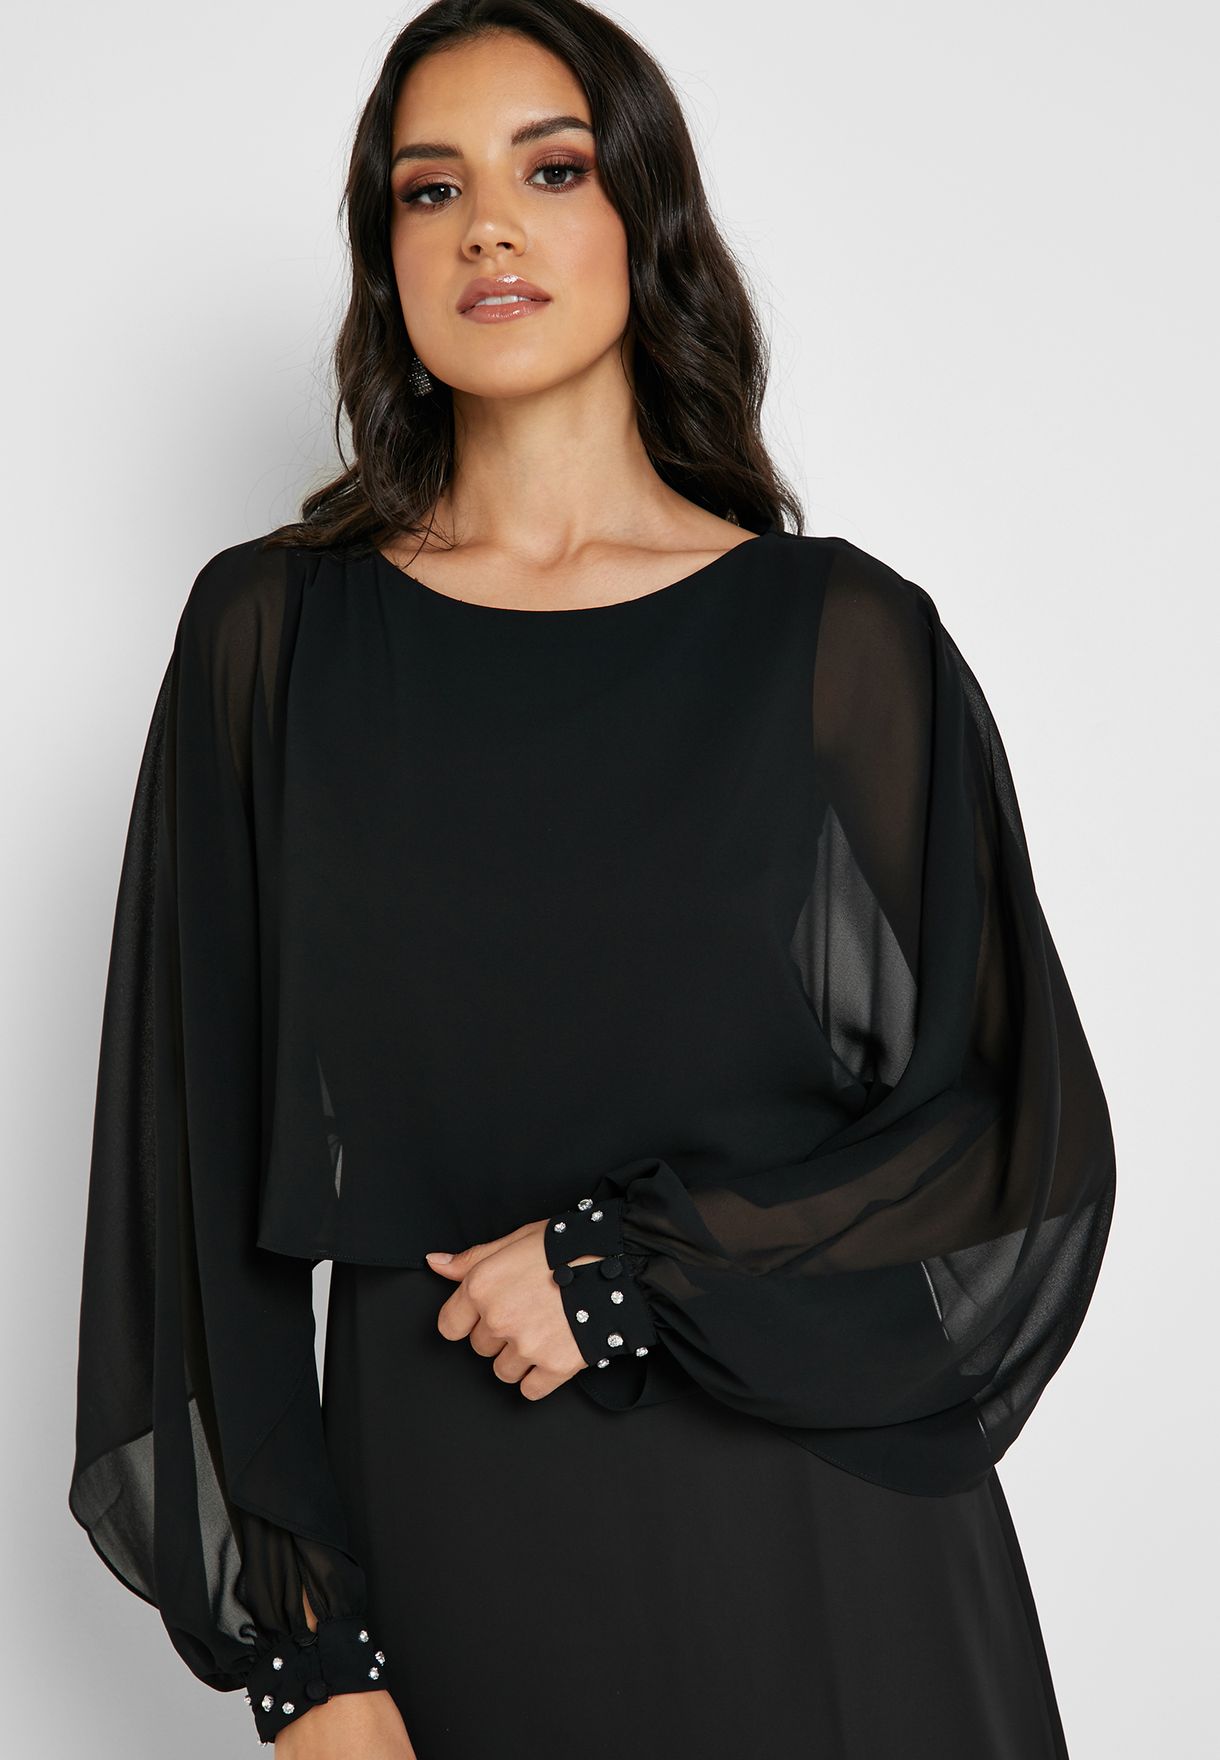 black bodysuit with a black mesh overlay dress